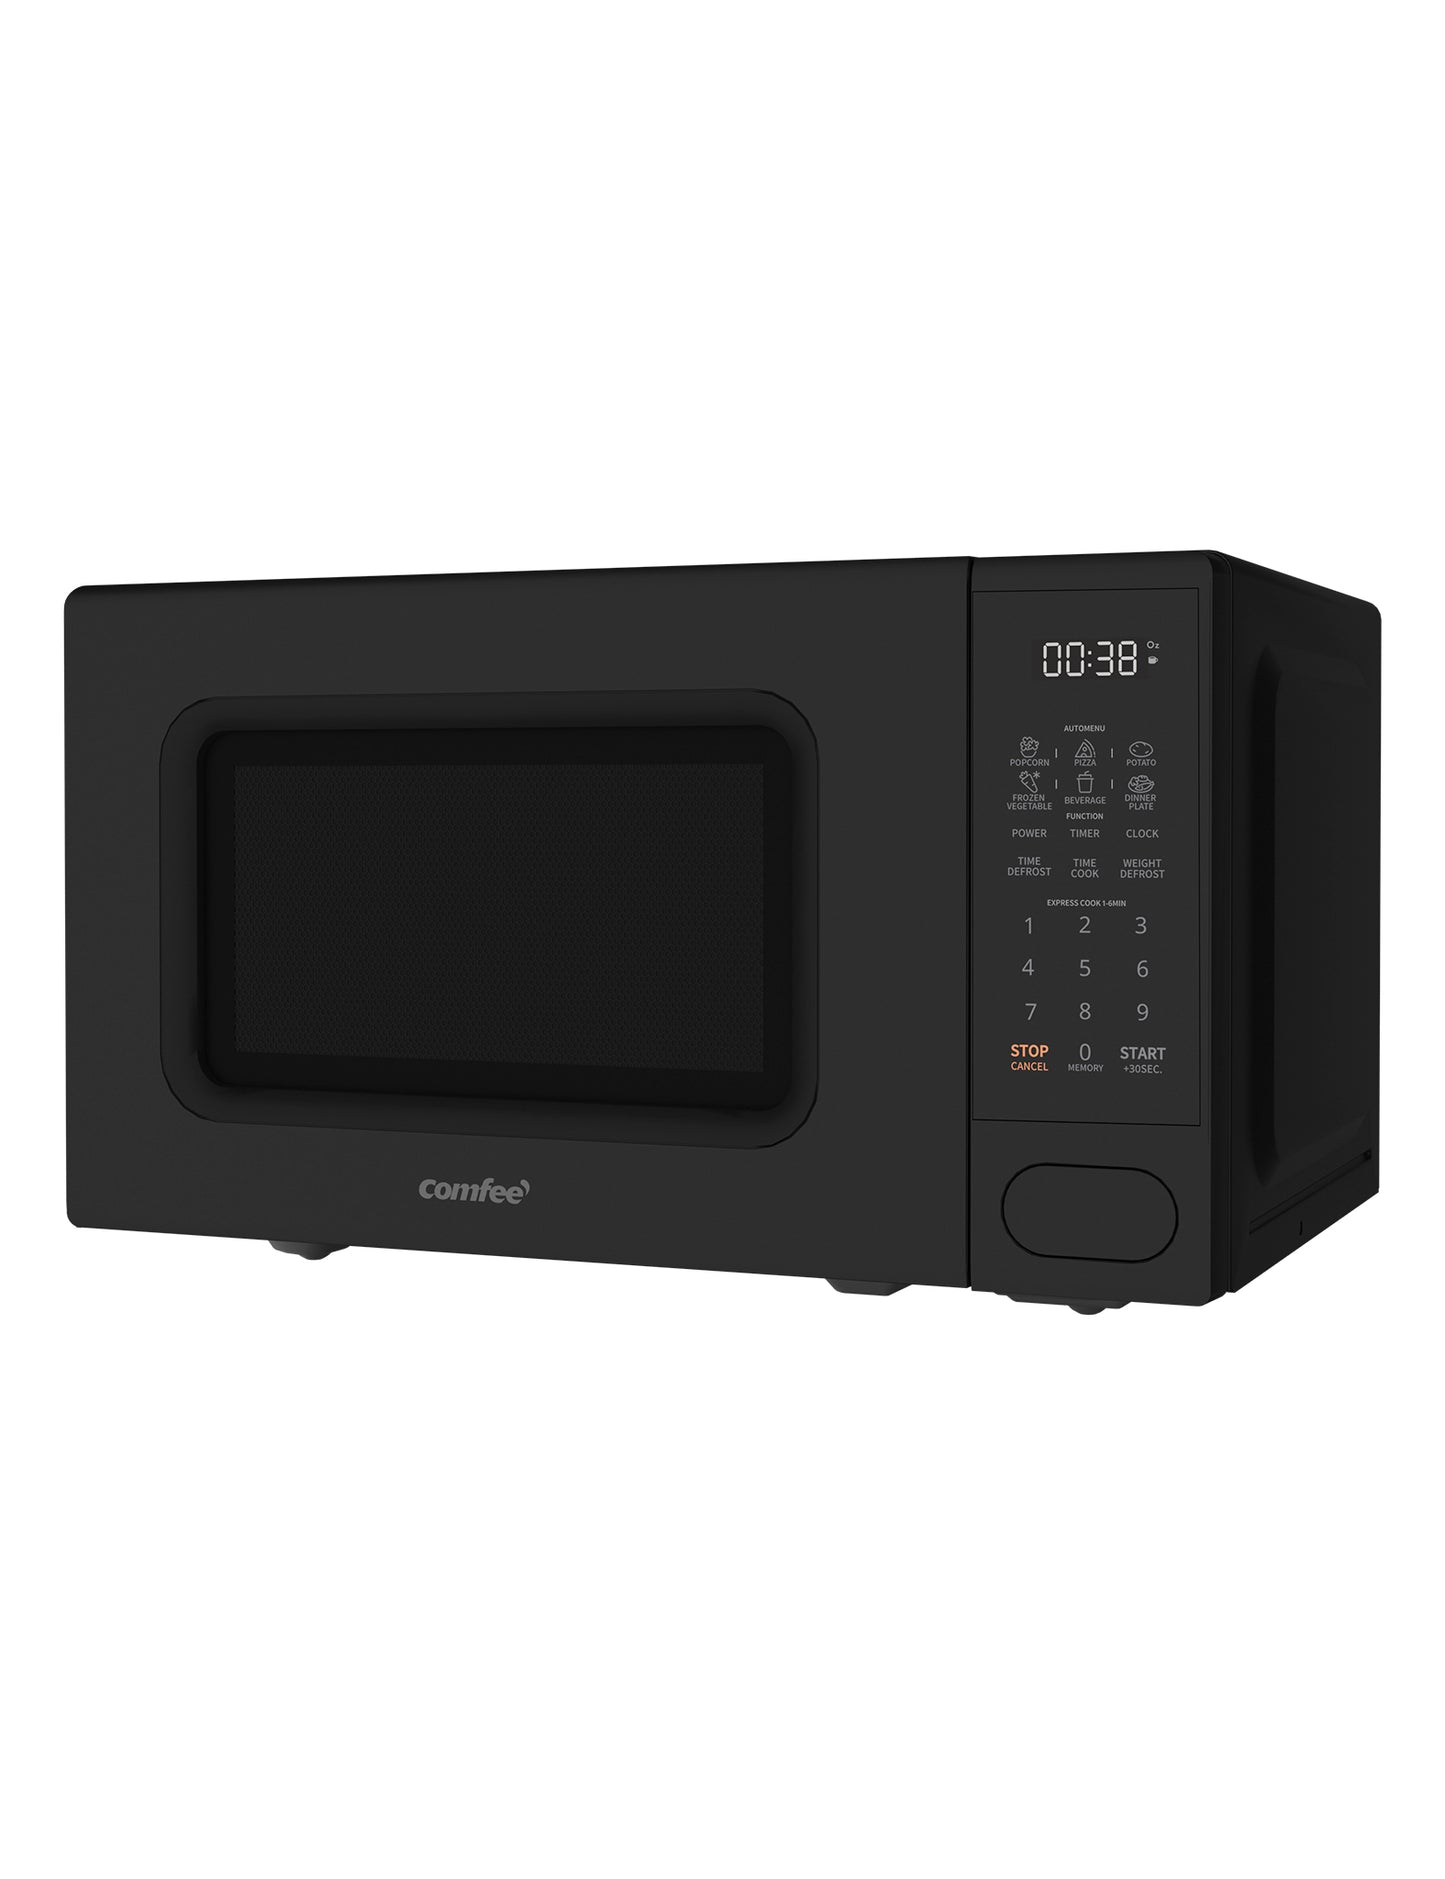 black comfee retro microwave